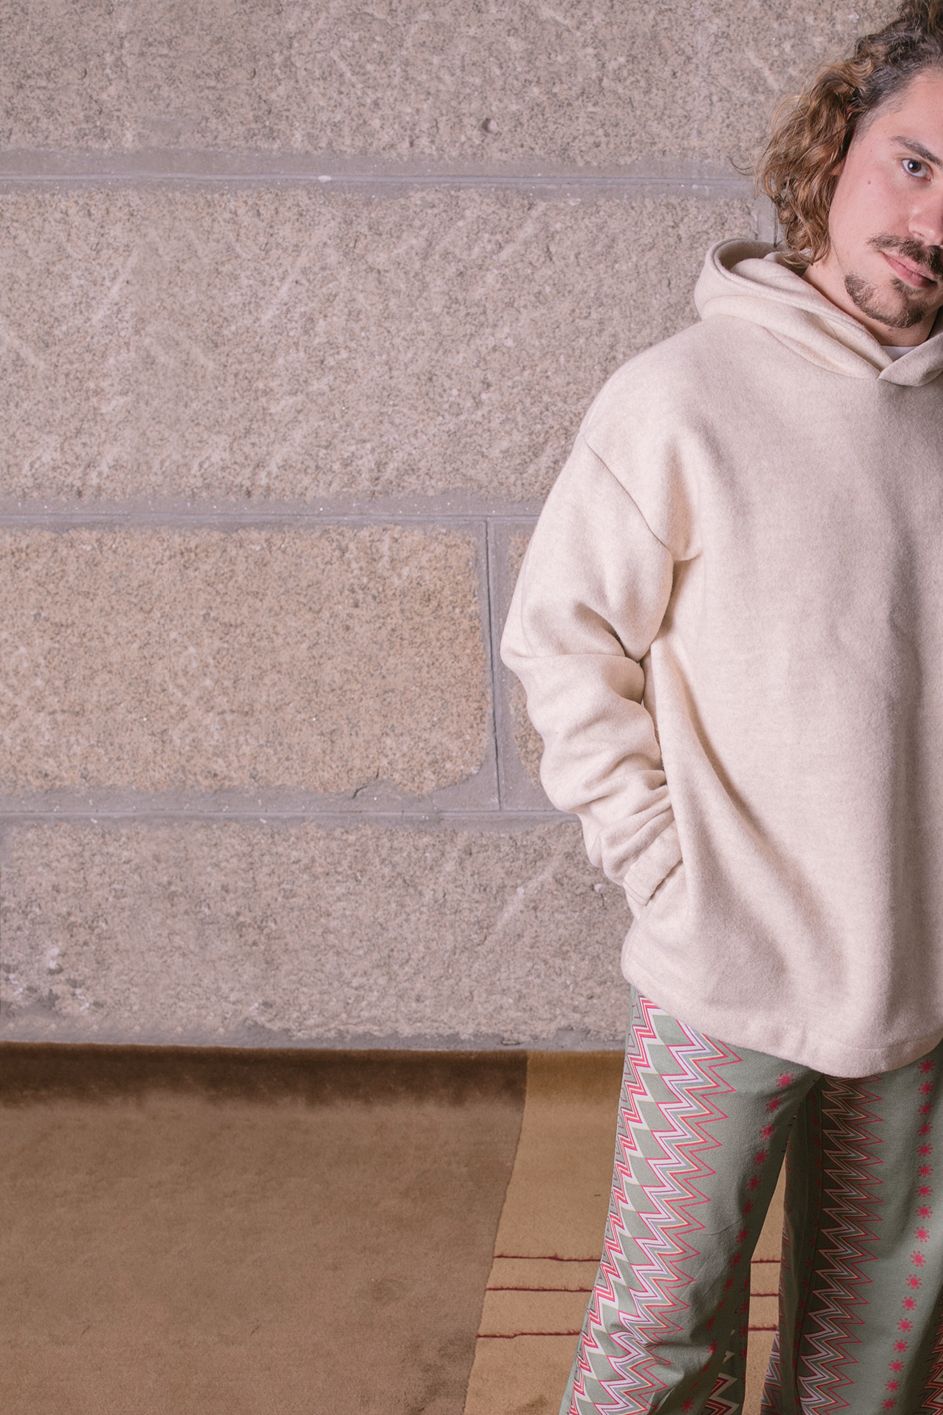 Unisex wide-leg cotton lounge pants with geometric print